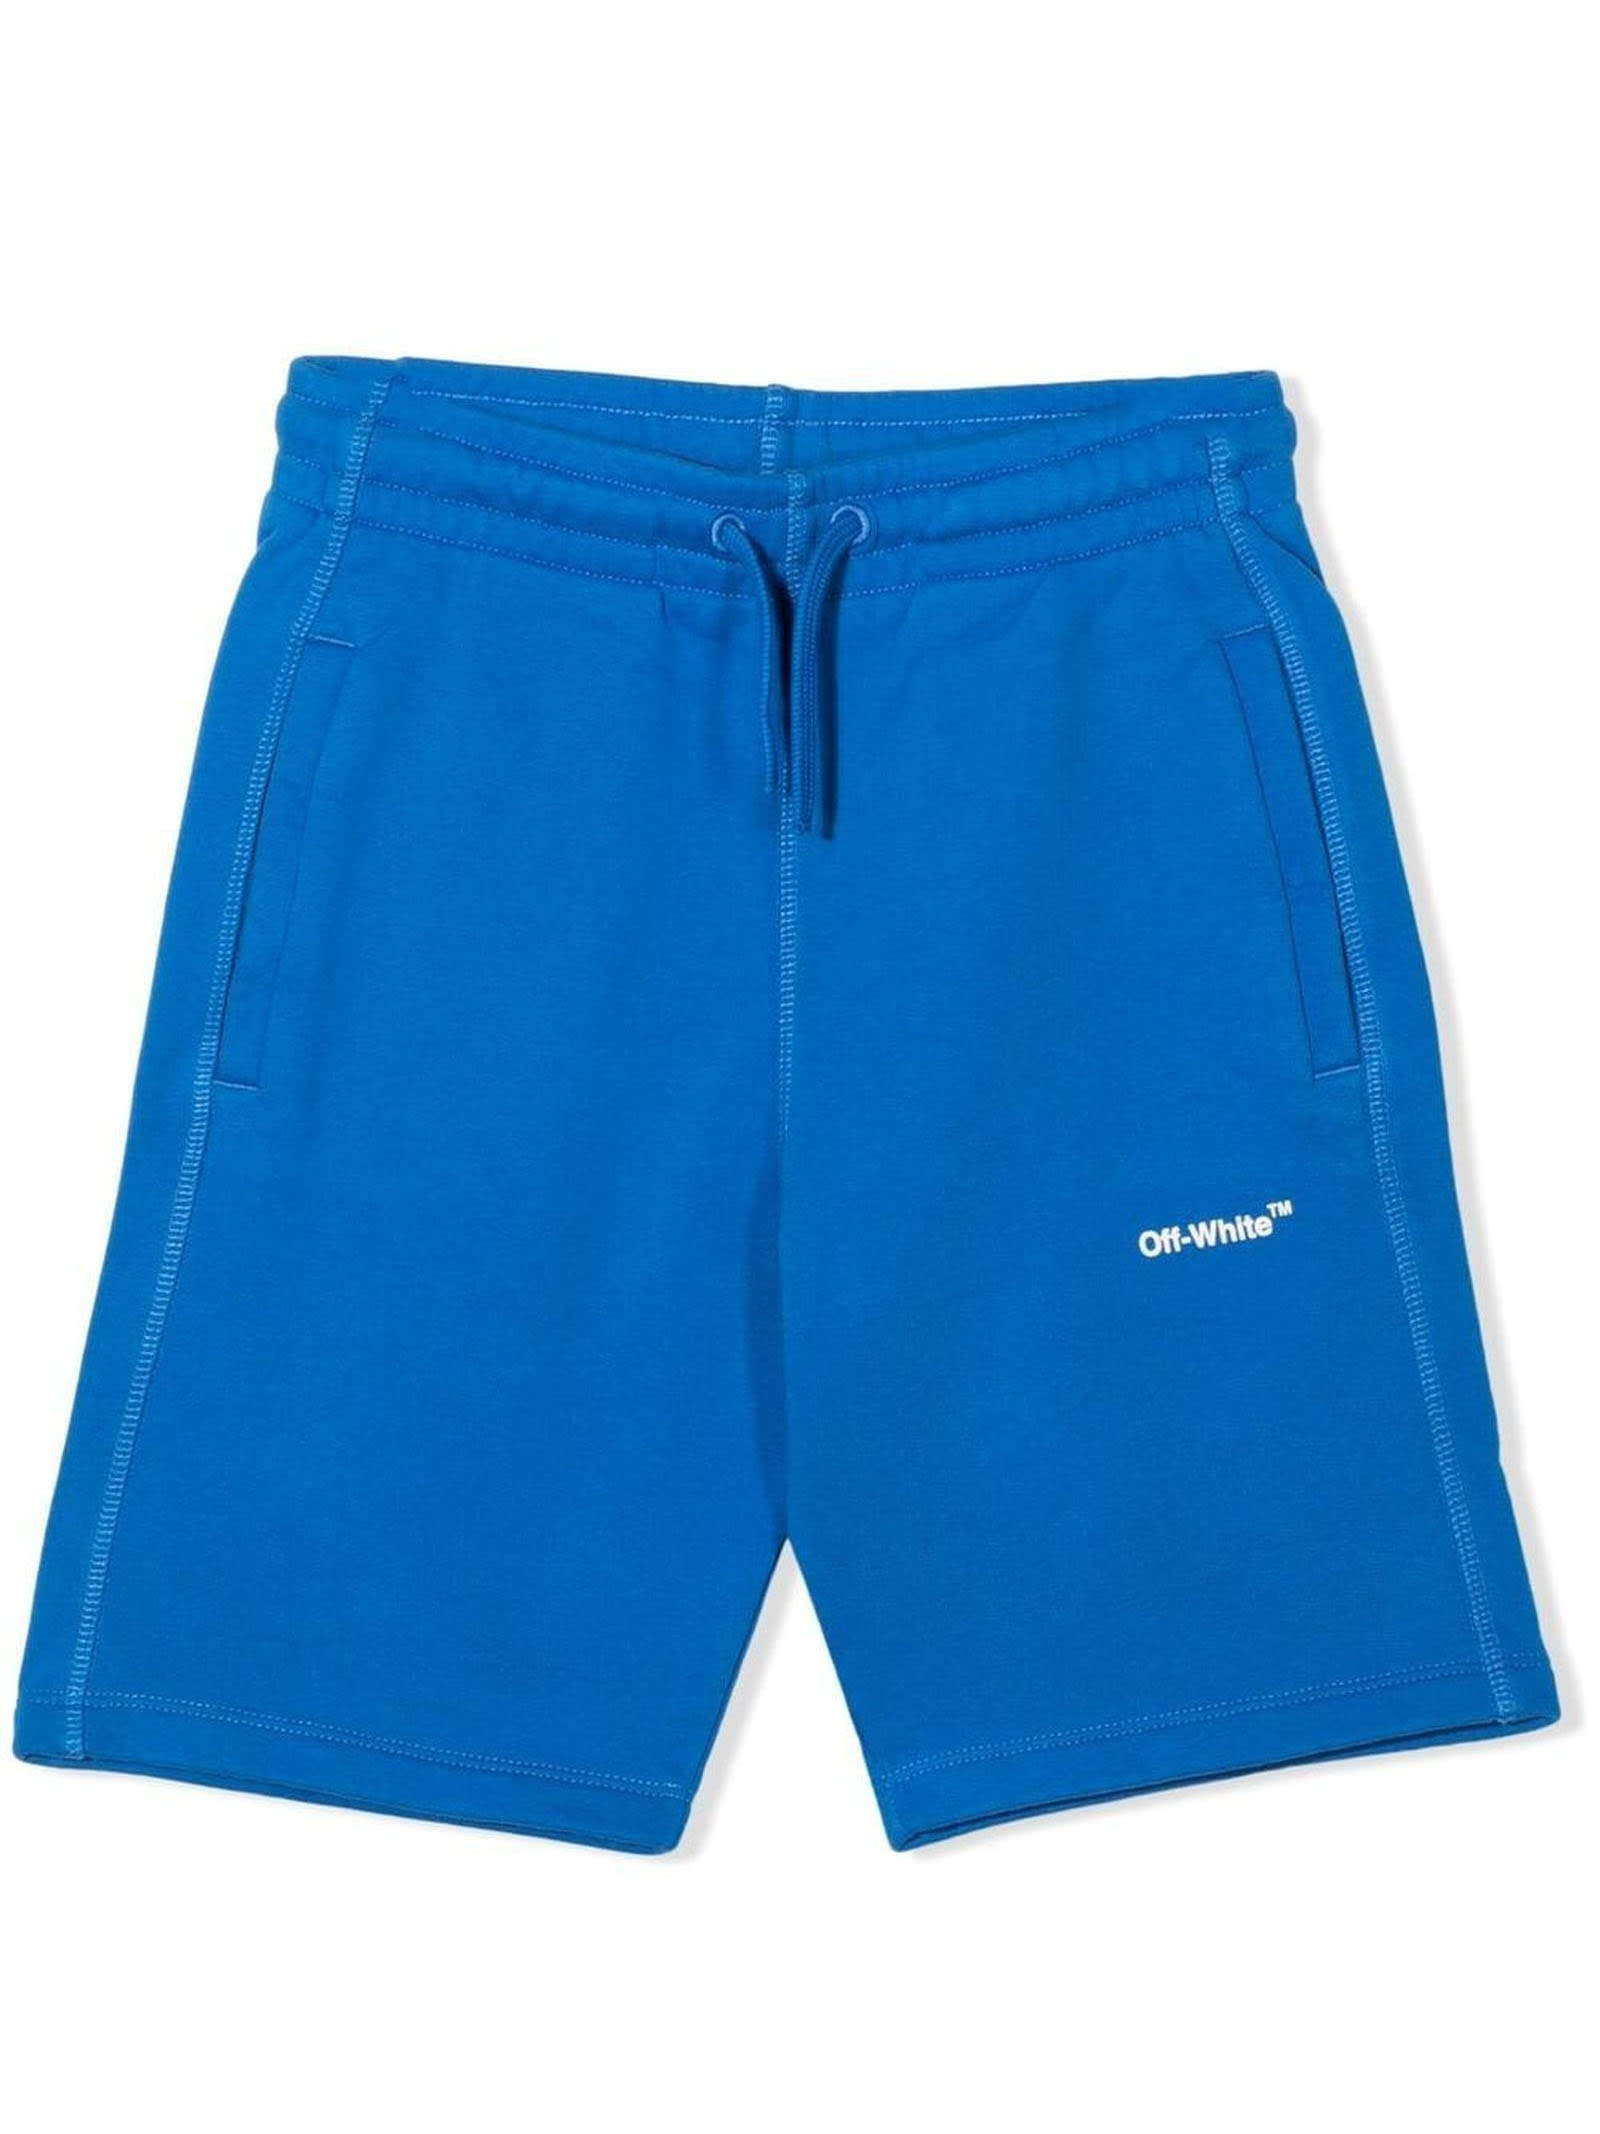 Off-White Blue Cotton Shorts